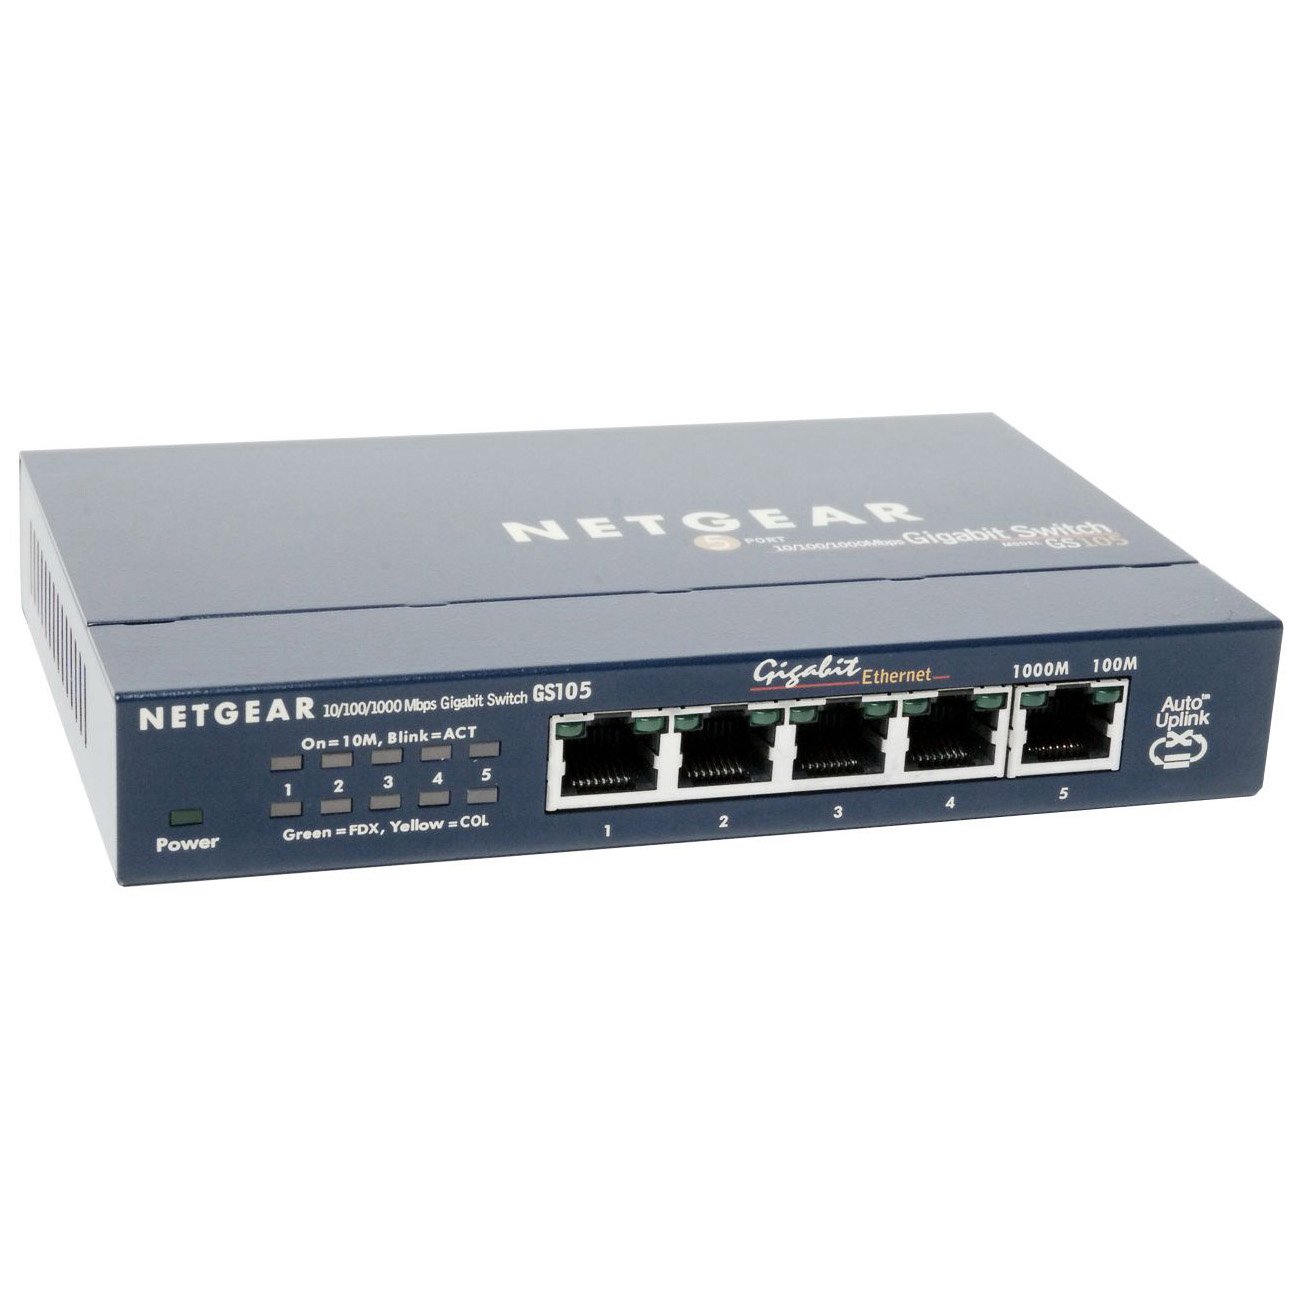 Netgear ProSafe GS105 5 Port Gigabit Ethernet Switch